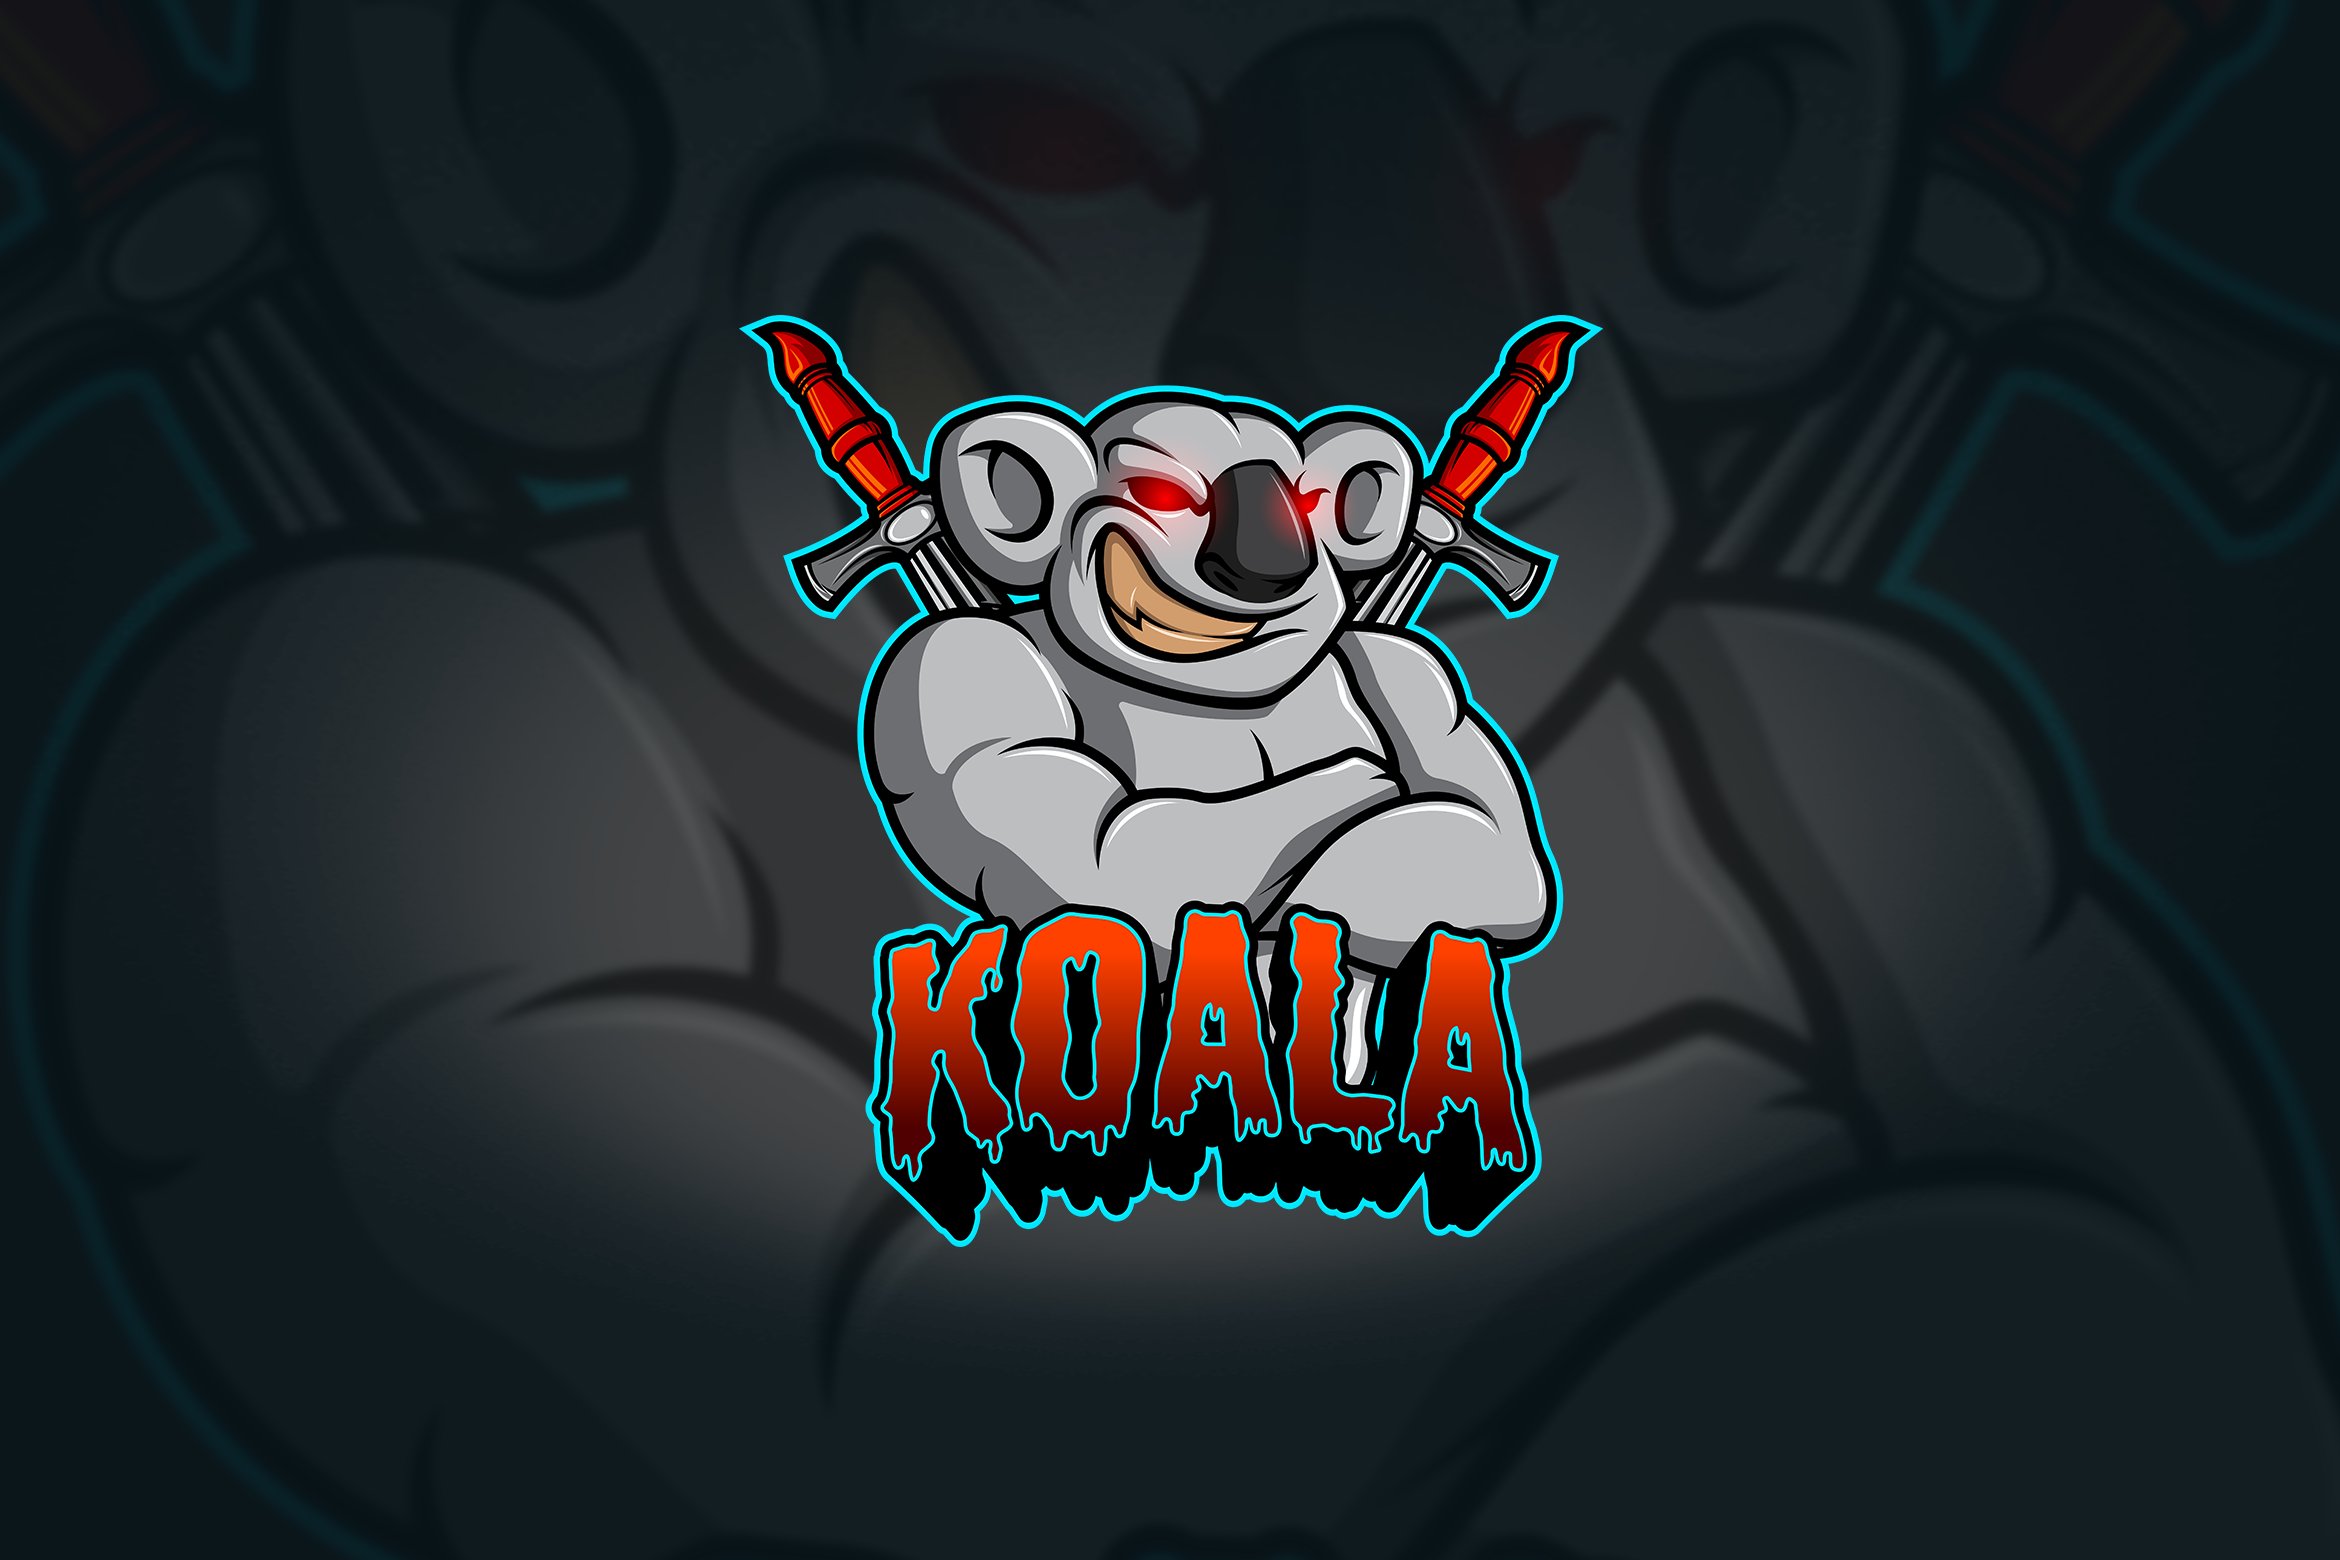 Koala - Mascot & Esport Logo cover image.